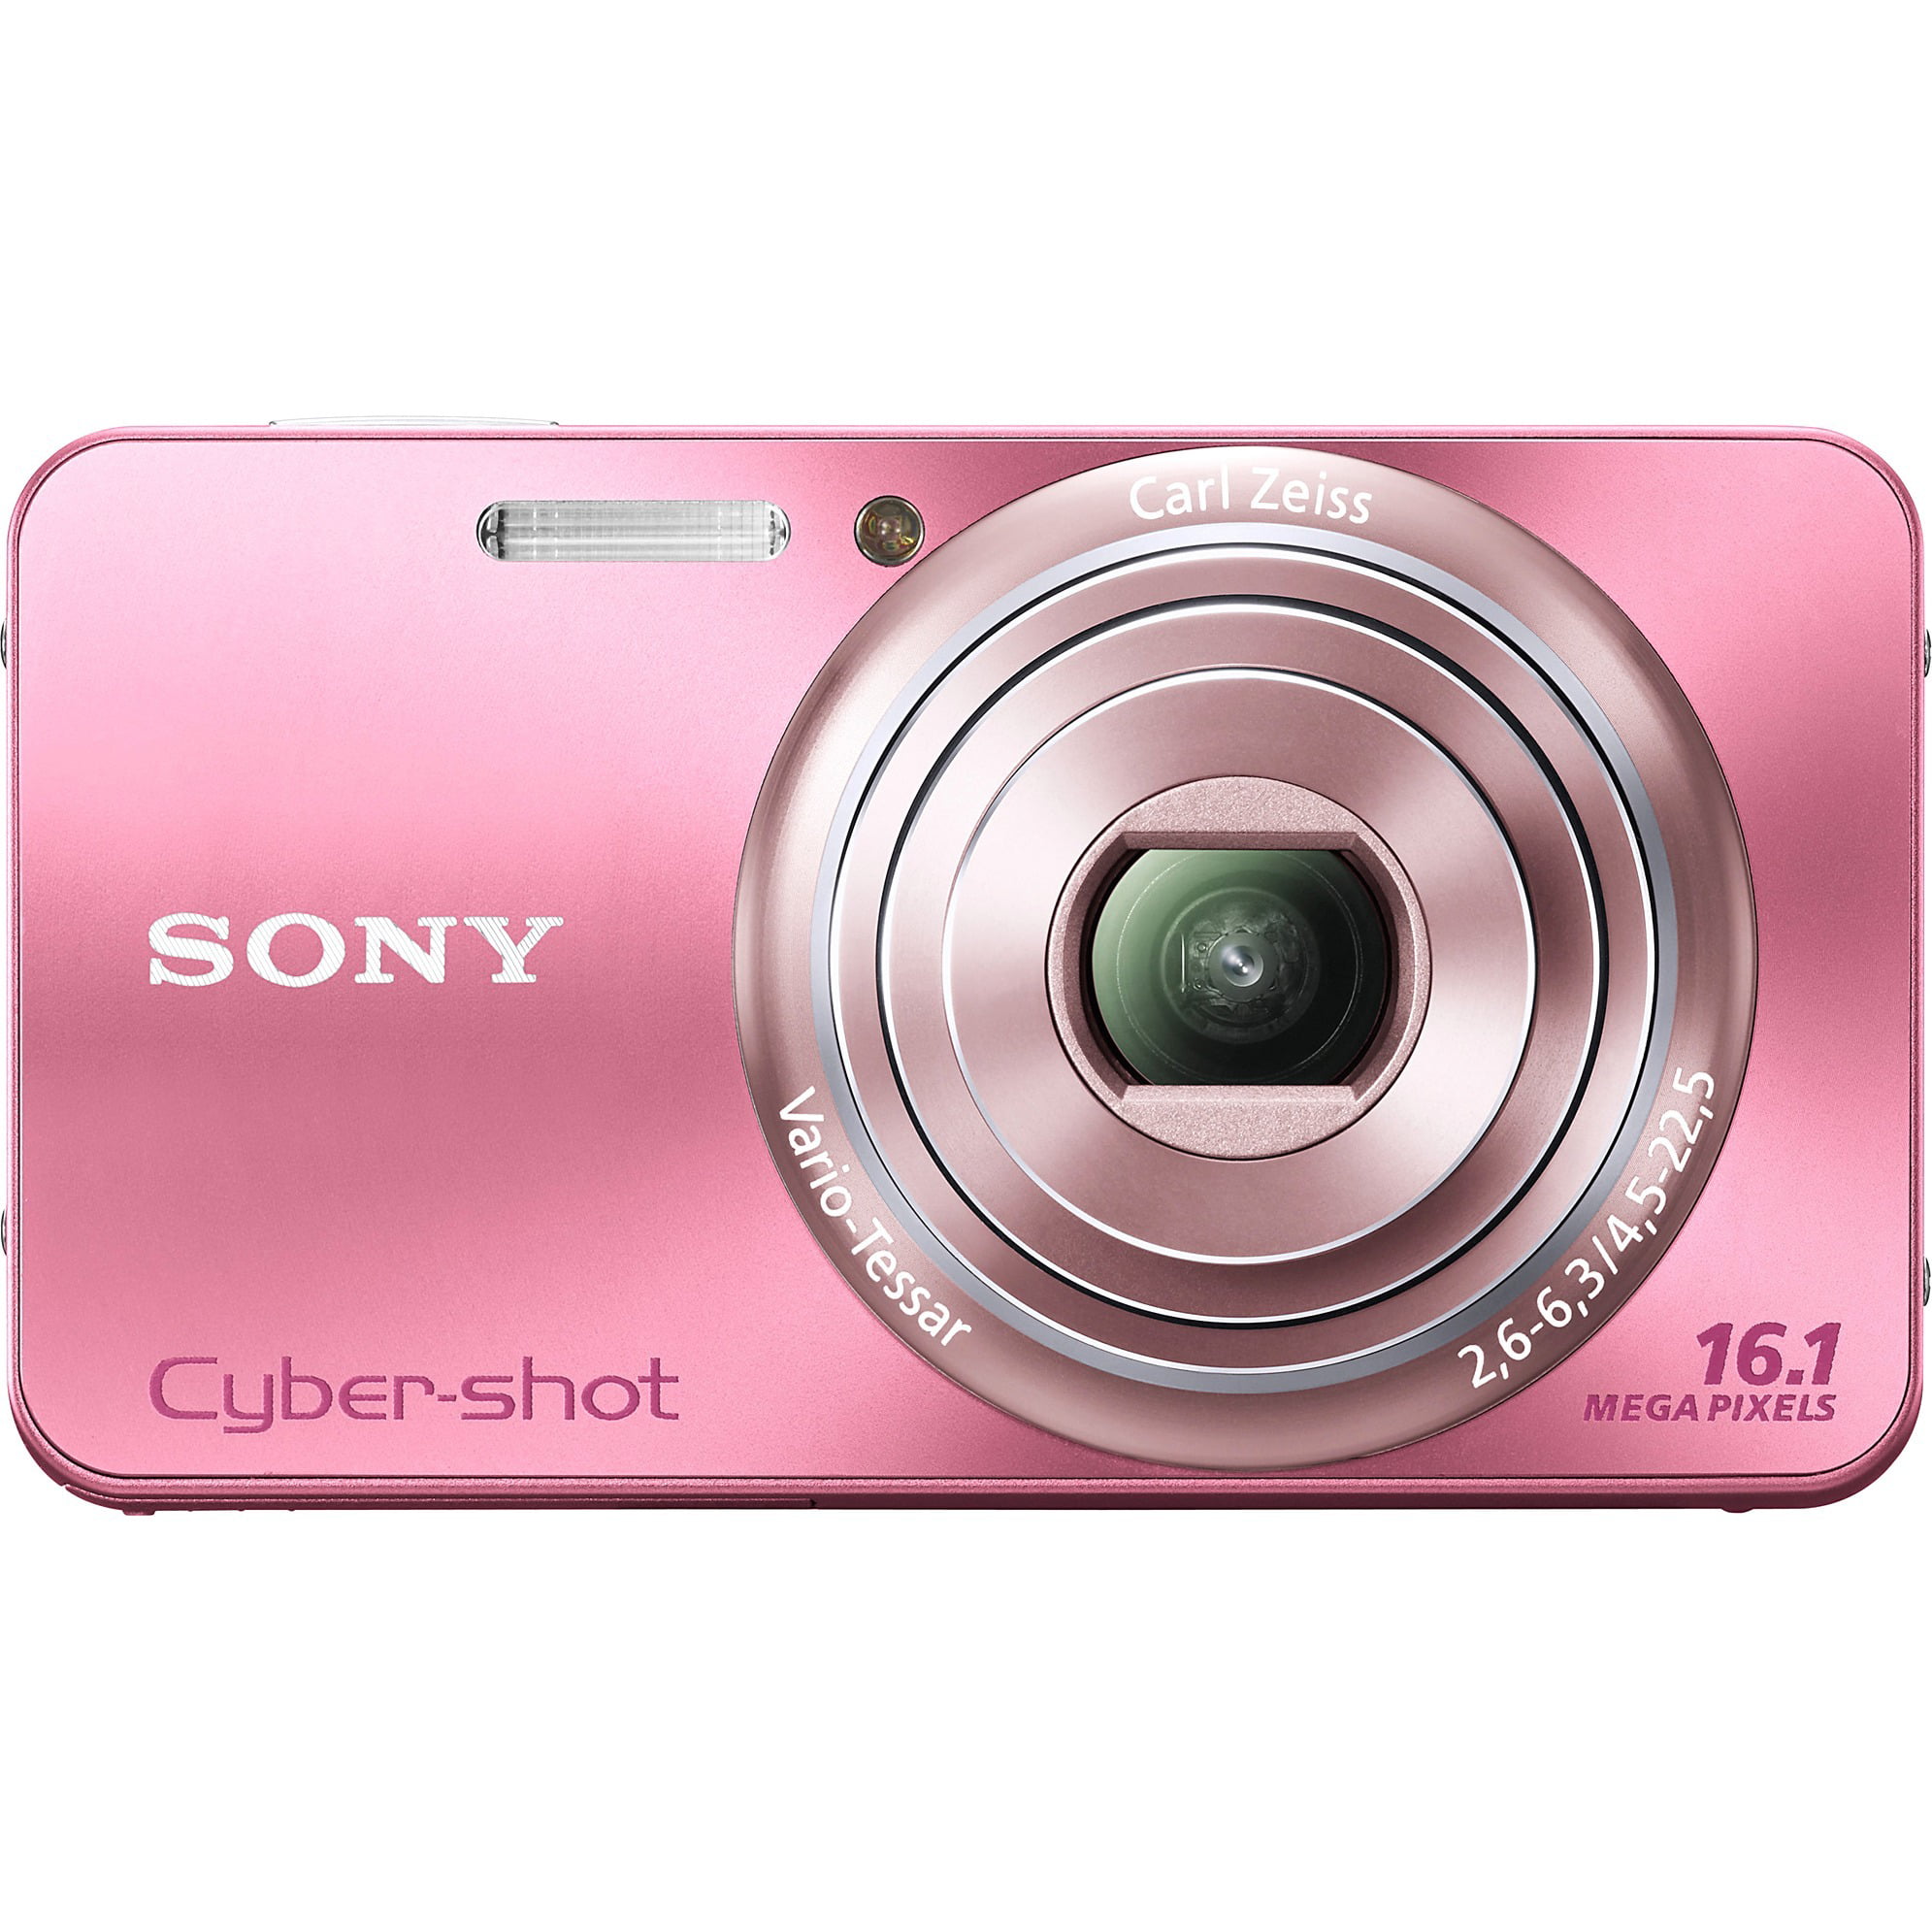 Sony Cyber-shot DSC-W570 16.1 Megapixel Compact Camera, Pink - Walmart